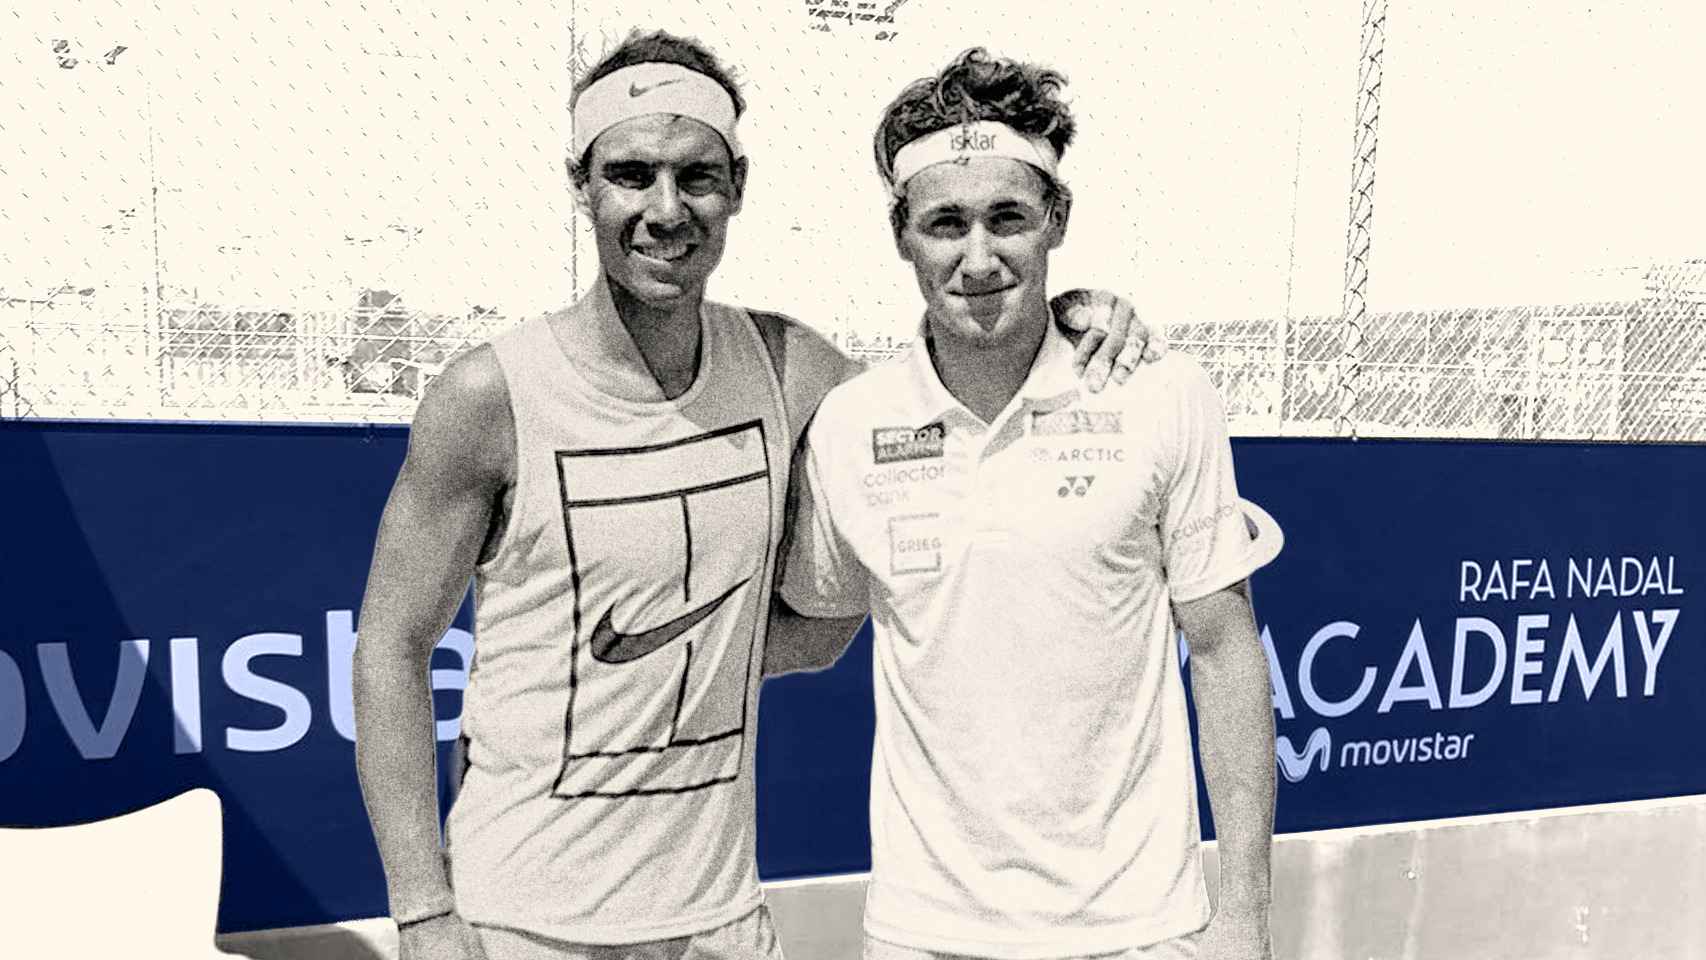 Rafael Nadal y Casper Ruud, en la Rafa Nadal Academy